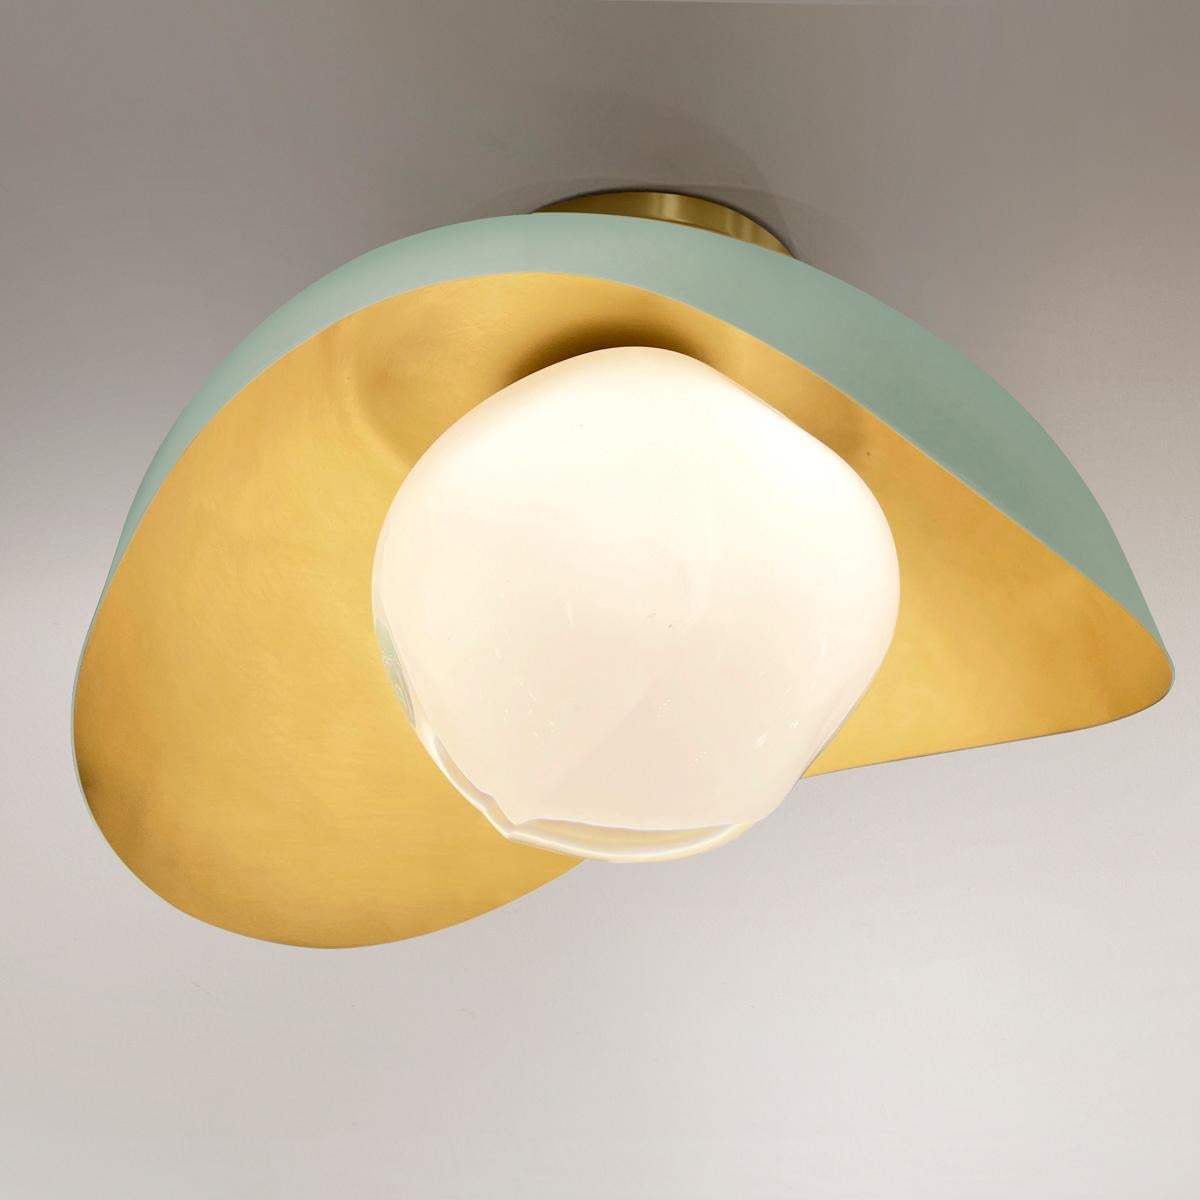 Italian Perla Flushmount Ceiling Light by Gaspare Asaro-Satin Brass/Acqua Finish For Sale